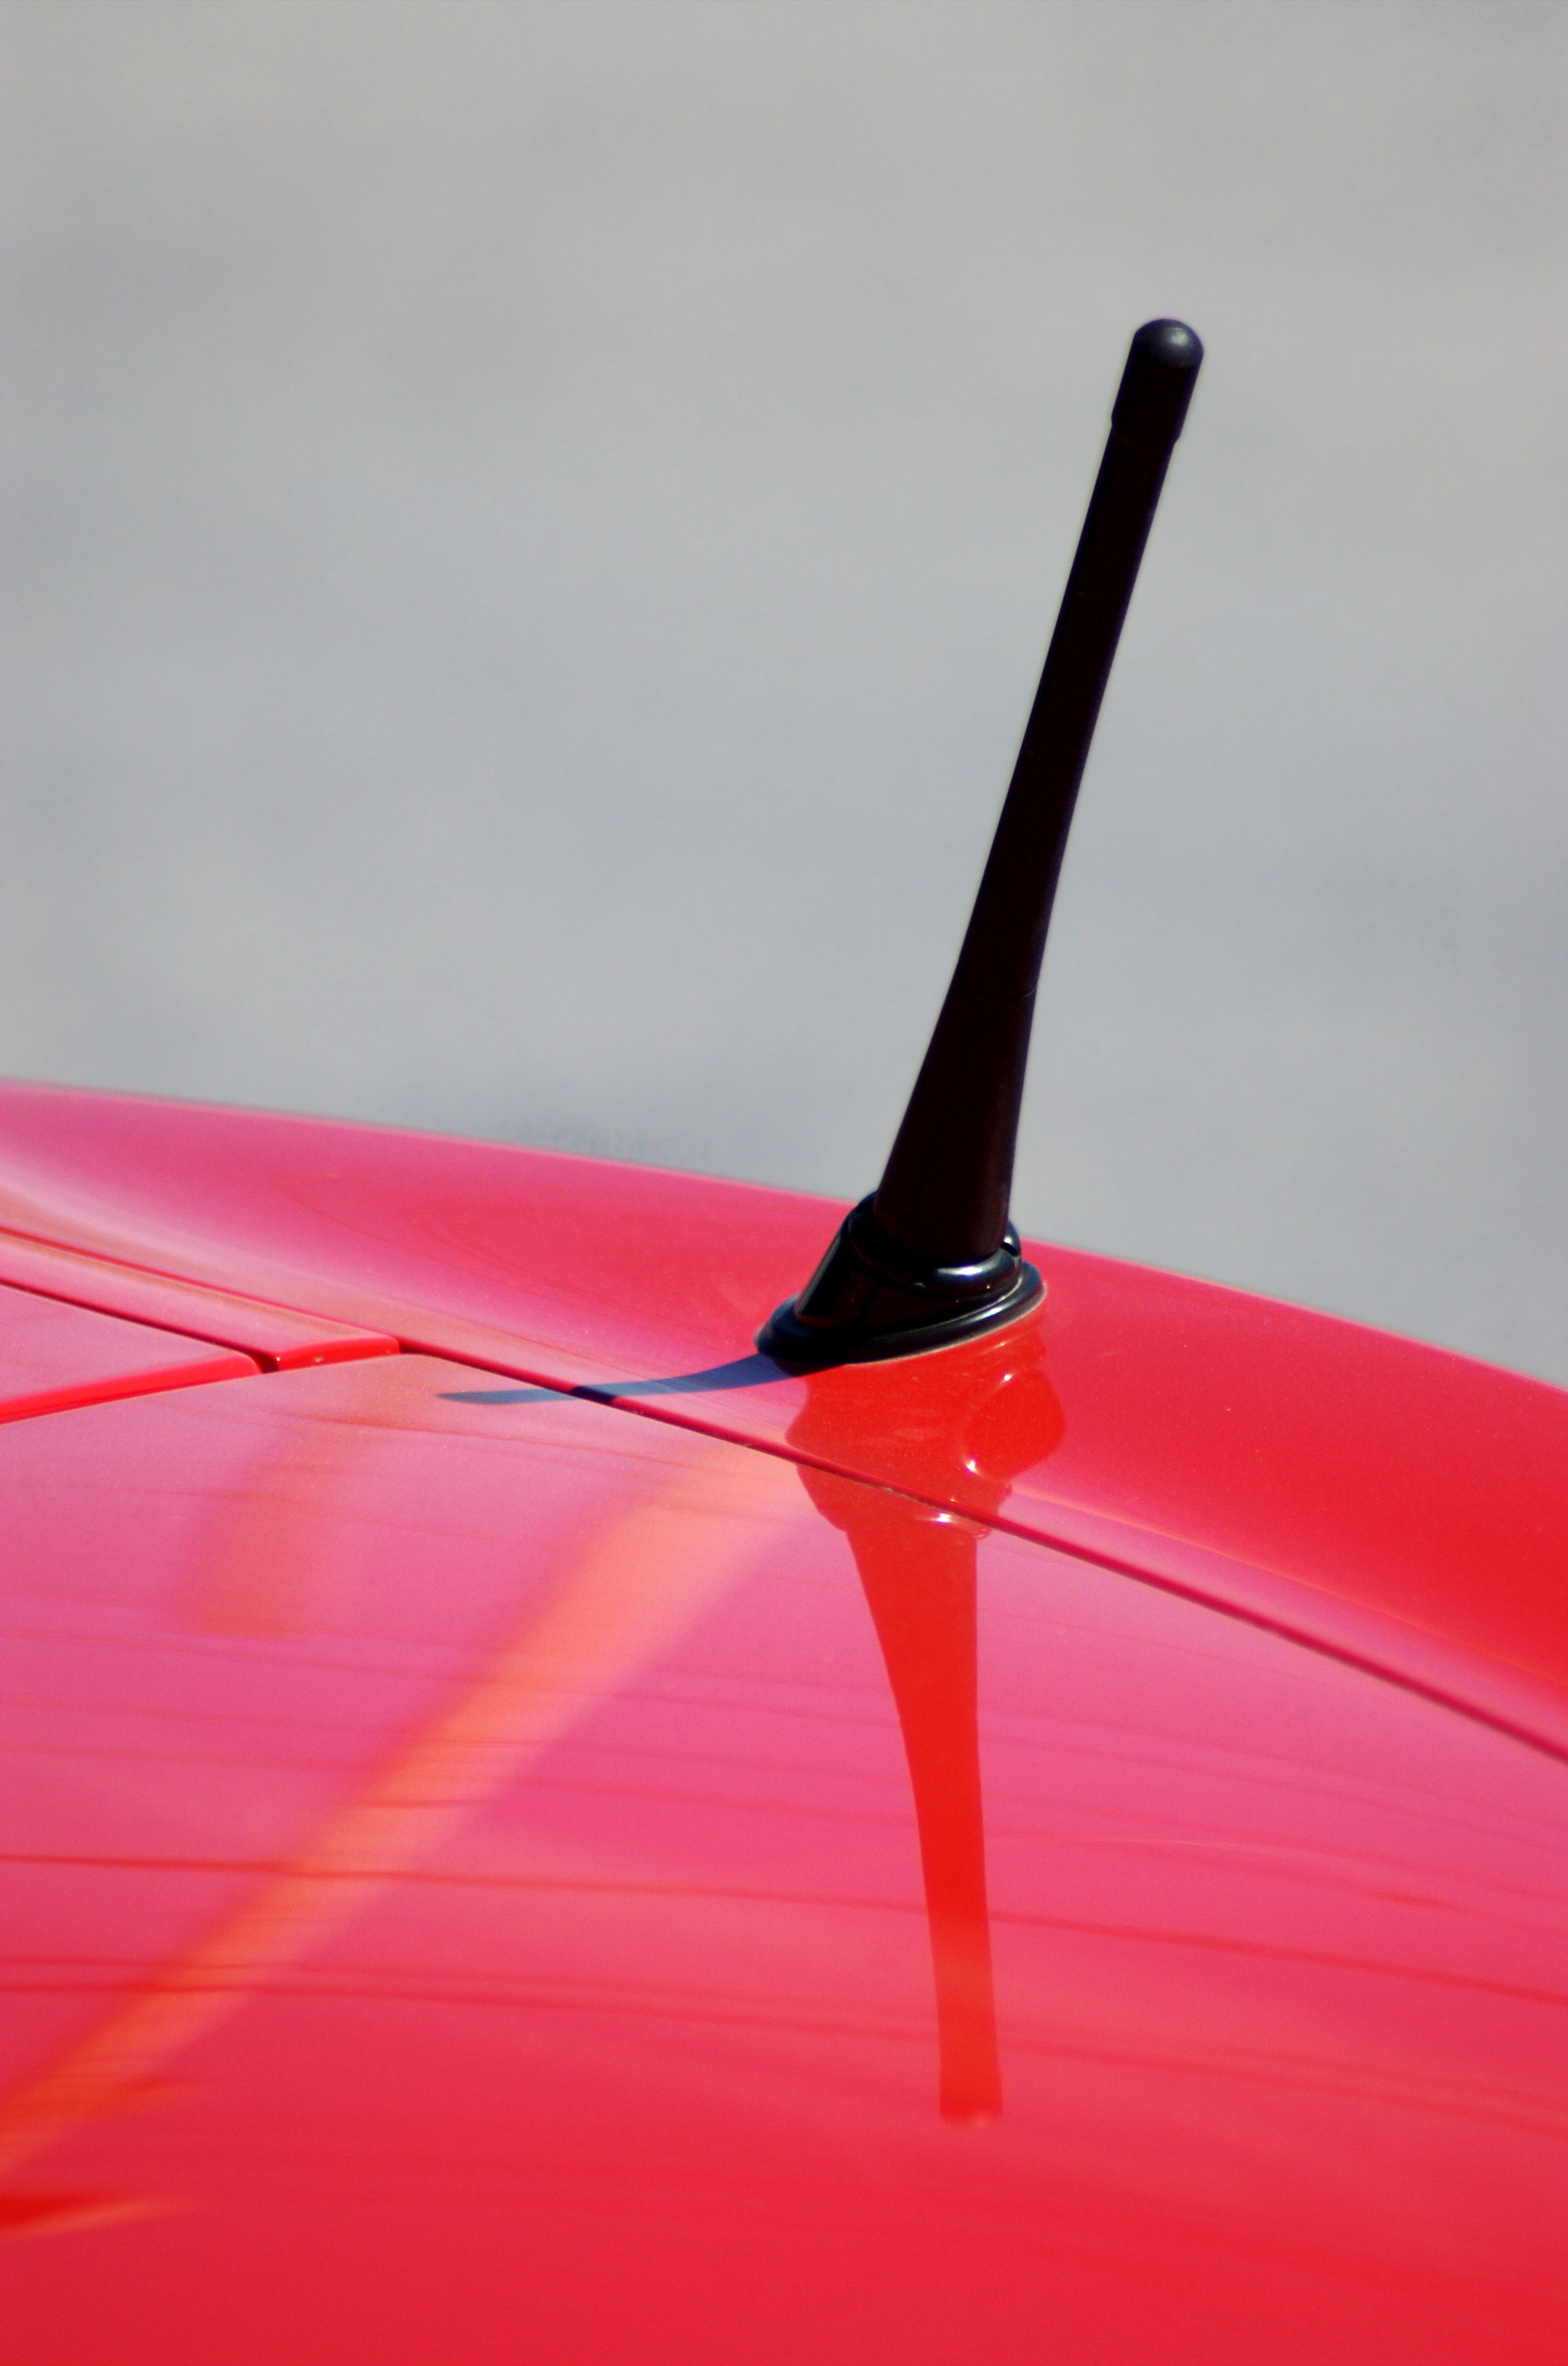 A red car's radio antenna up close